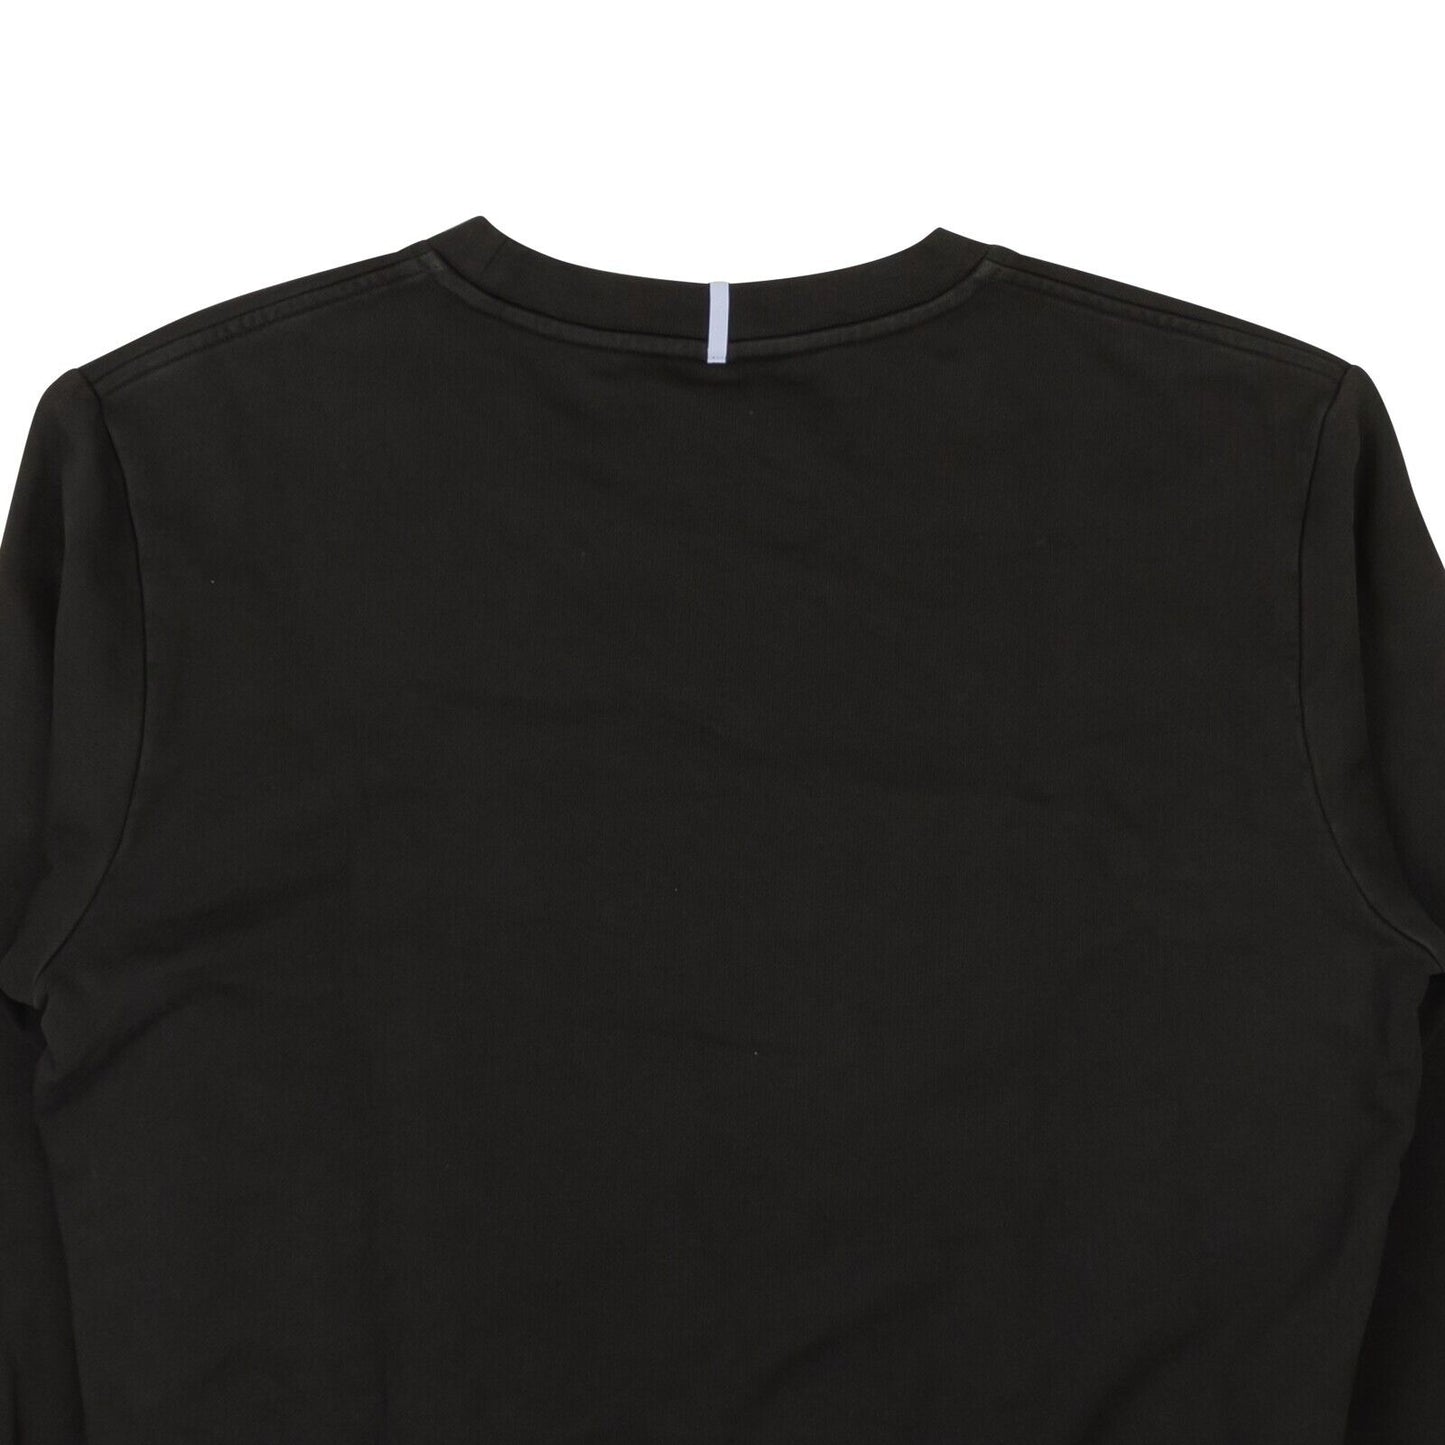 Mcq Mutual Trust Crewneck Sweatshirt - Black